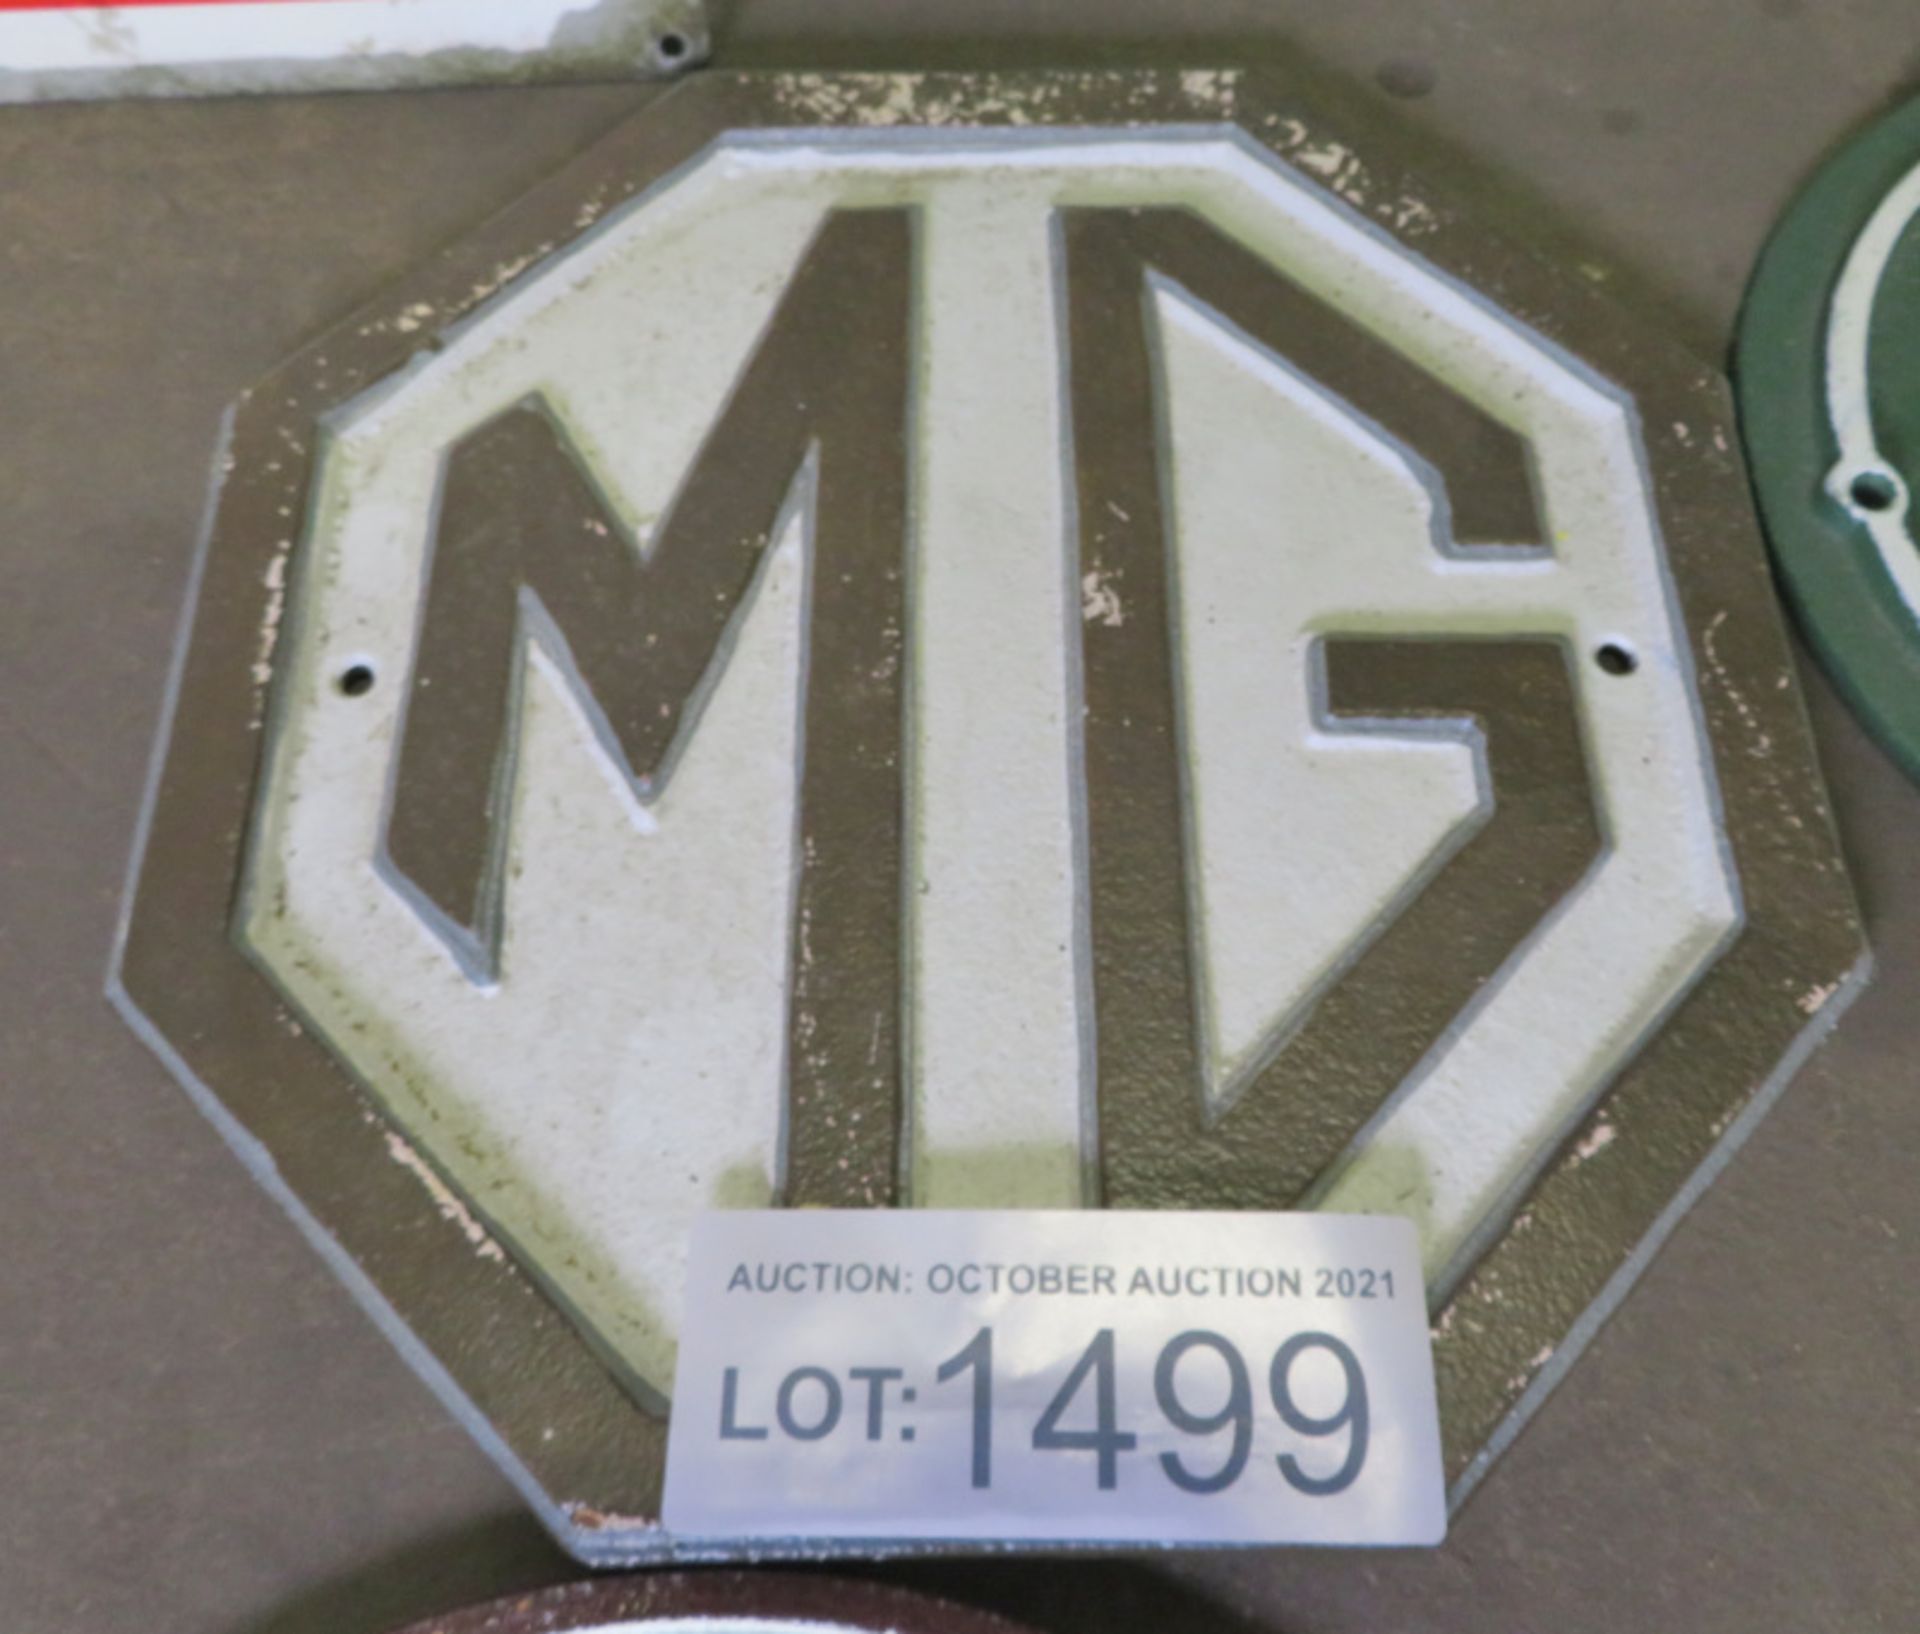 MG cast sign